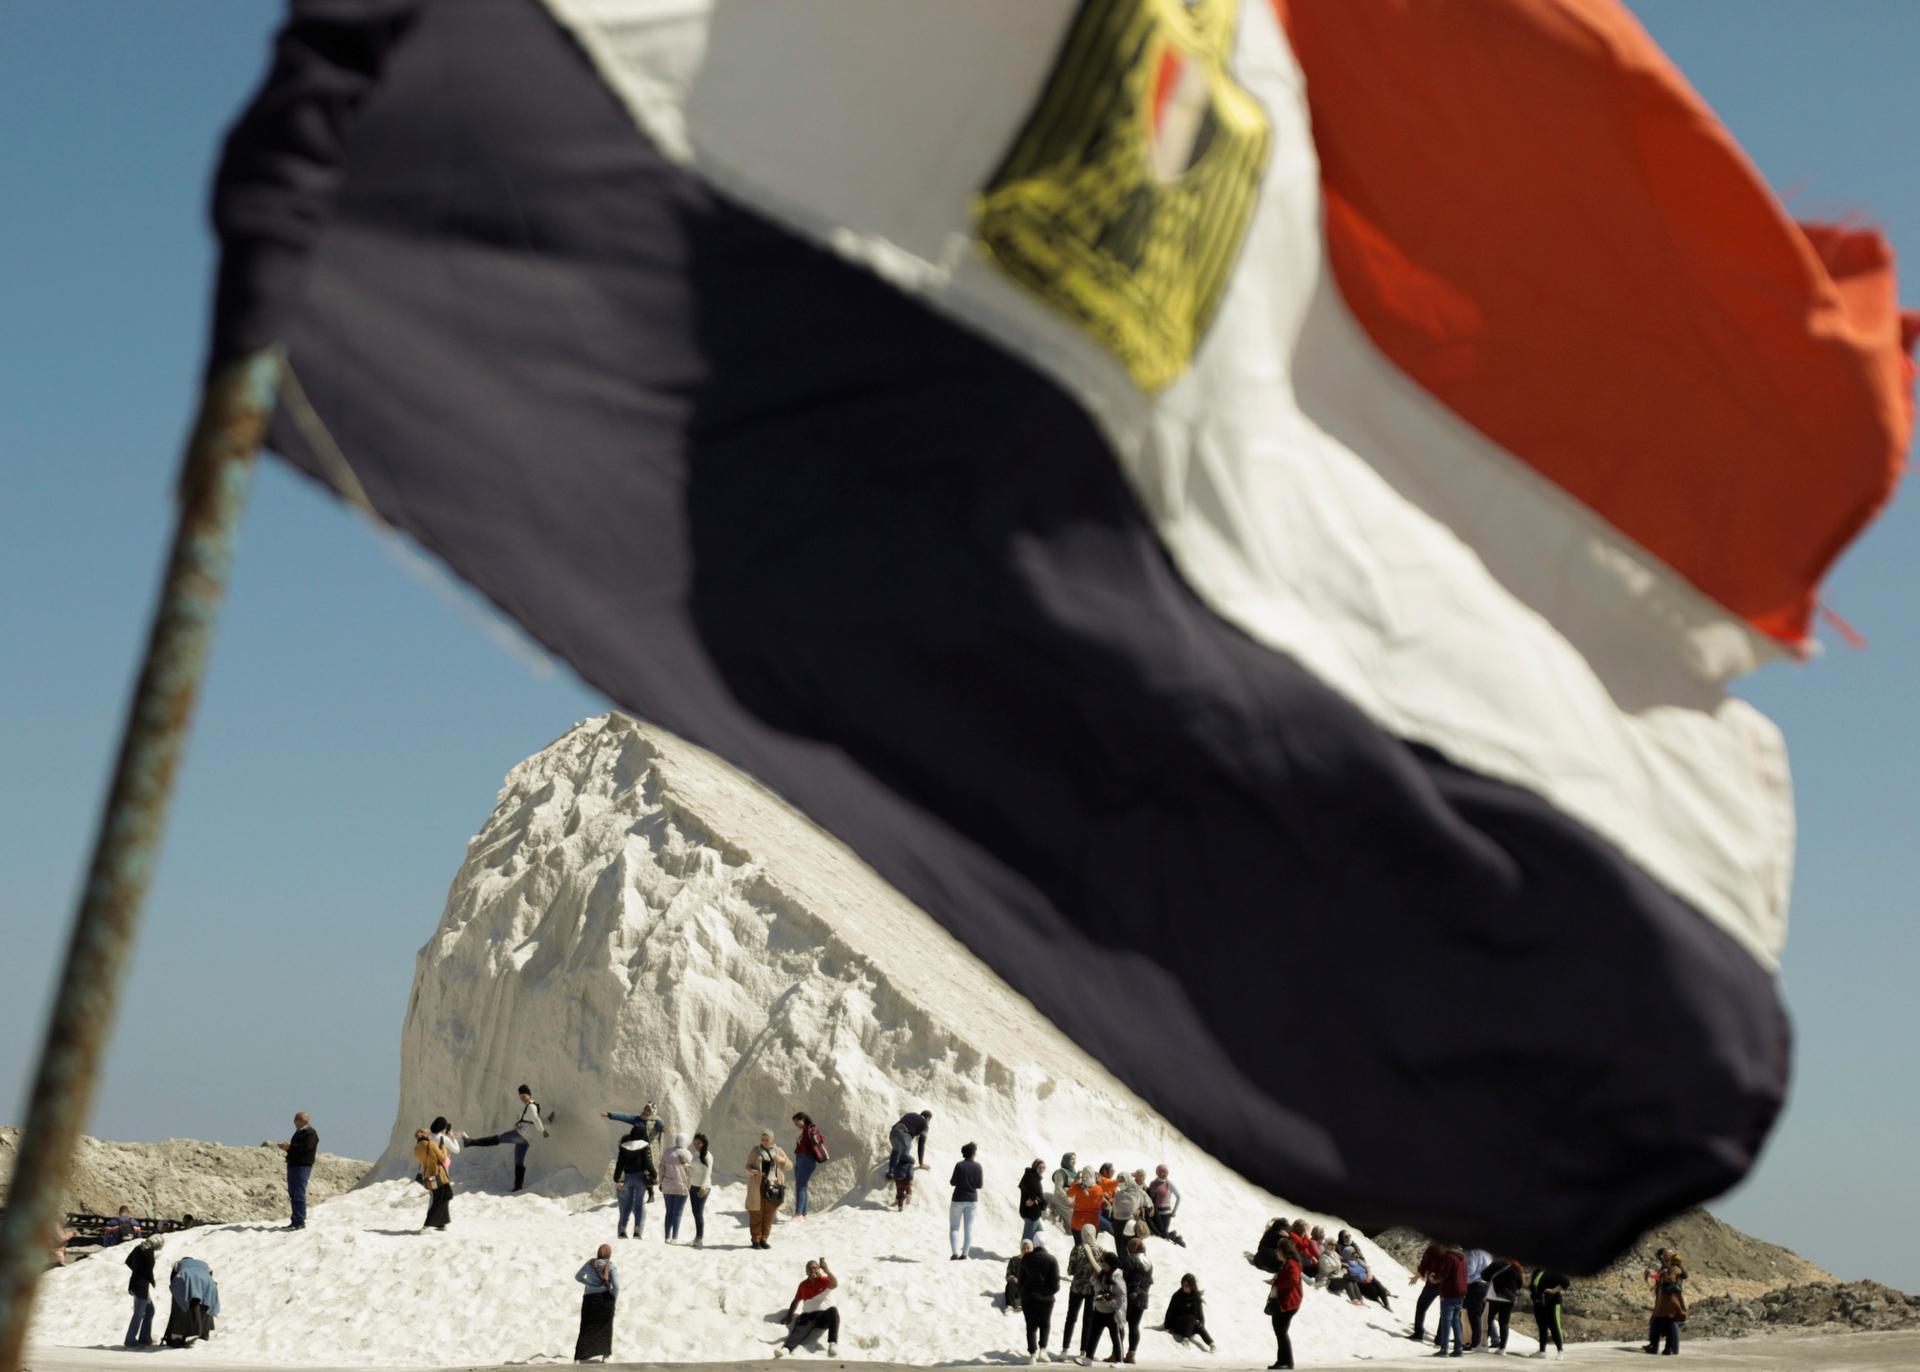 Sliding down salt hills in Egypt - in pictures